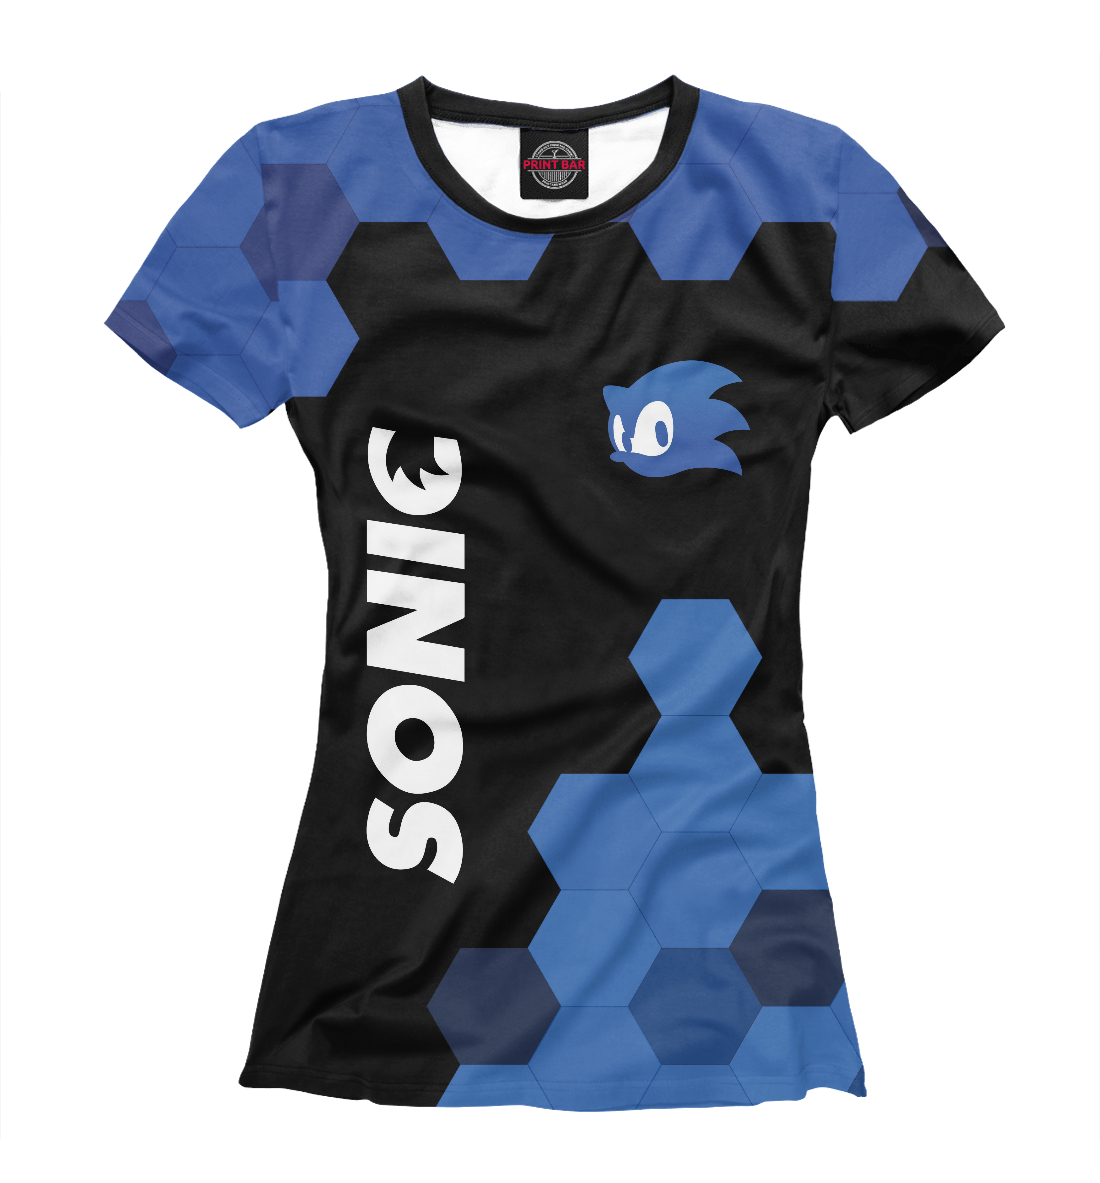 Футболка Соник / Sonic для женщин, артикул: RPG-252008-fut-1mp